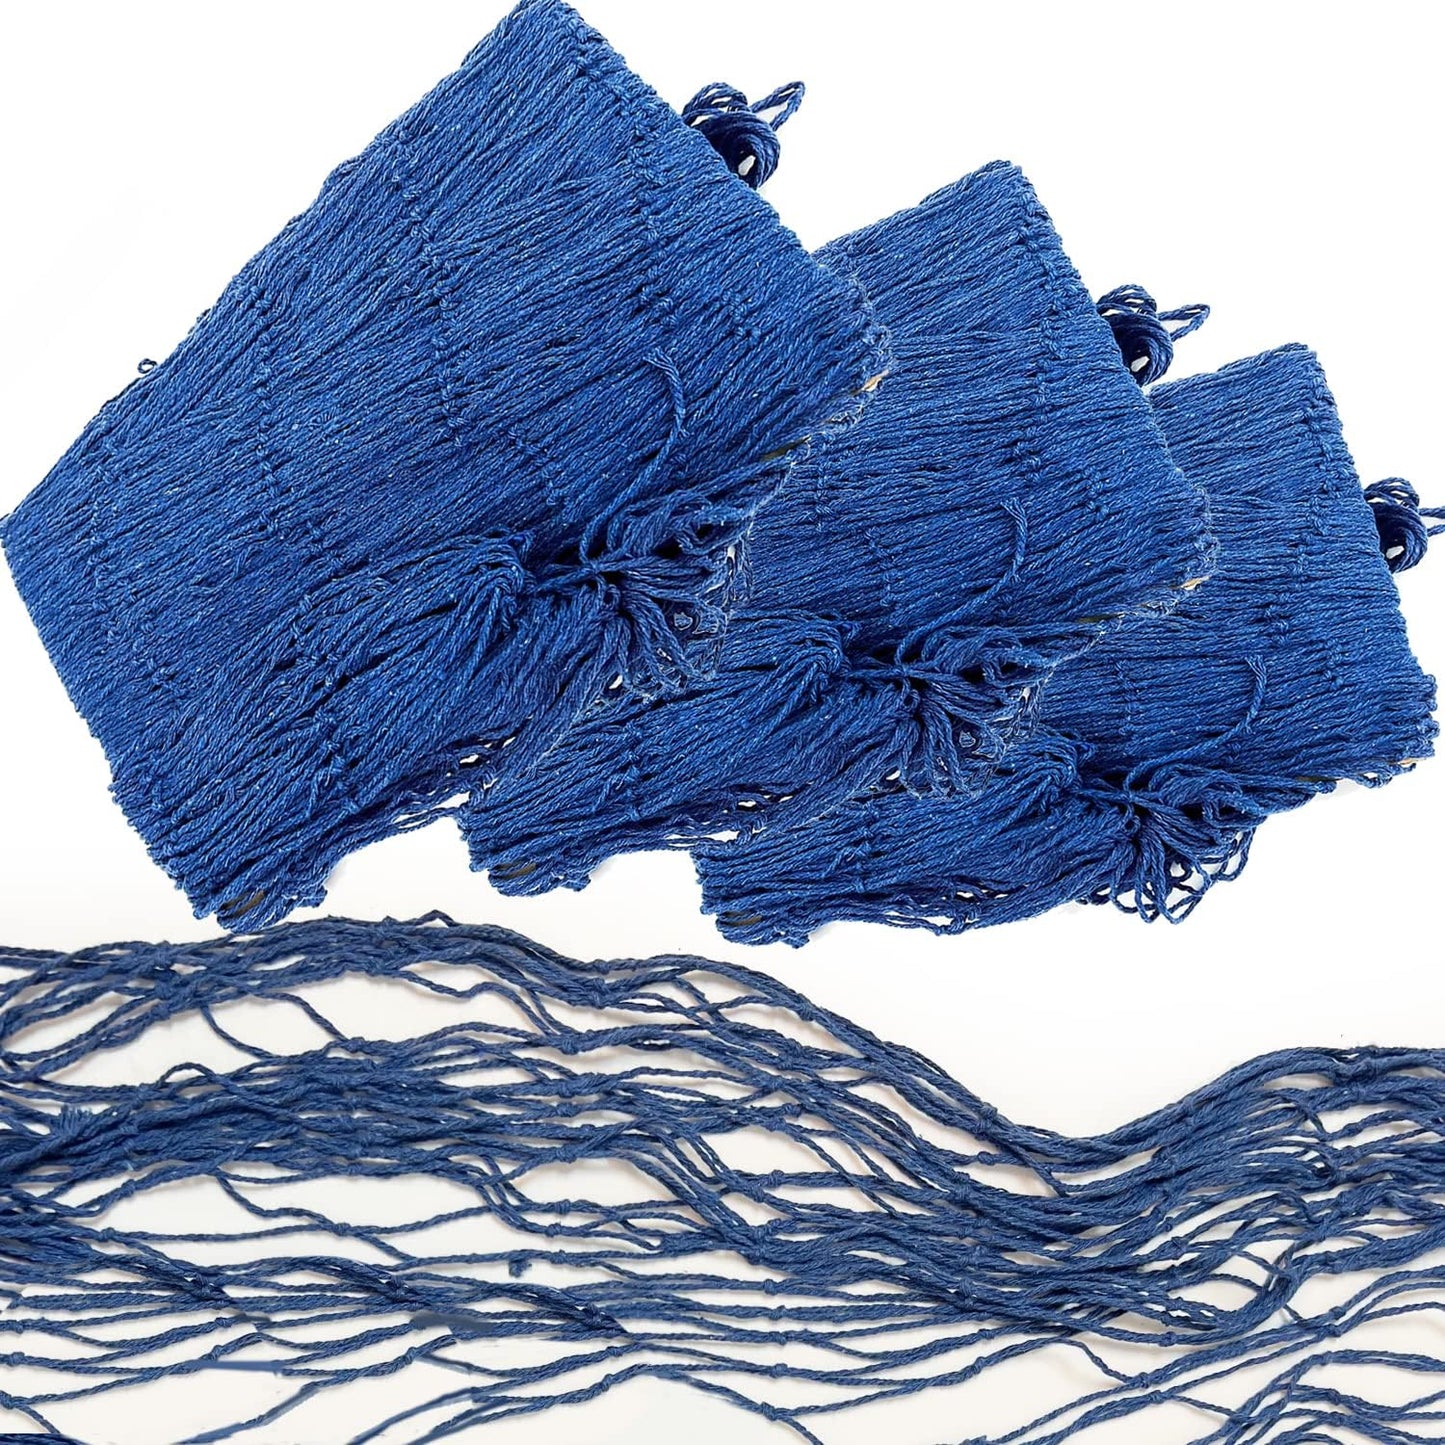 GIFTEXPRESS Natural Cotton Blue Decorative Fishing Net (14 ft x 4 ft)